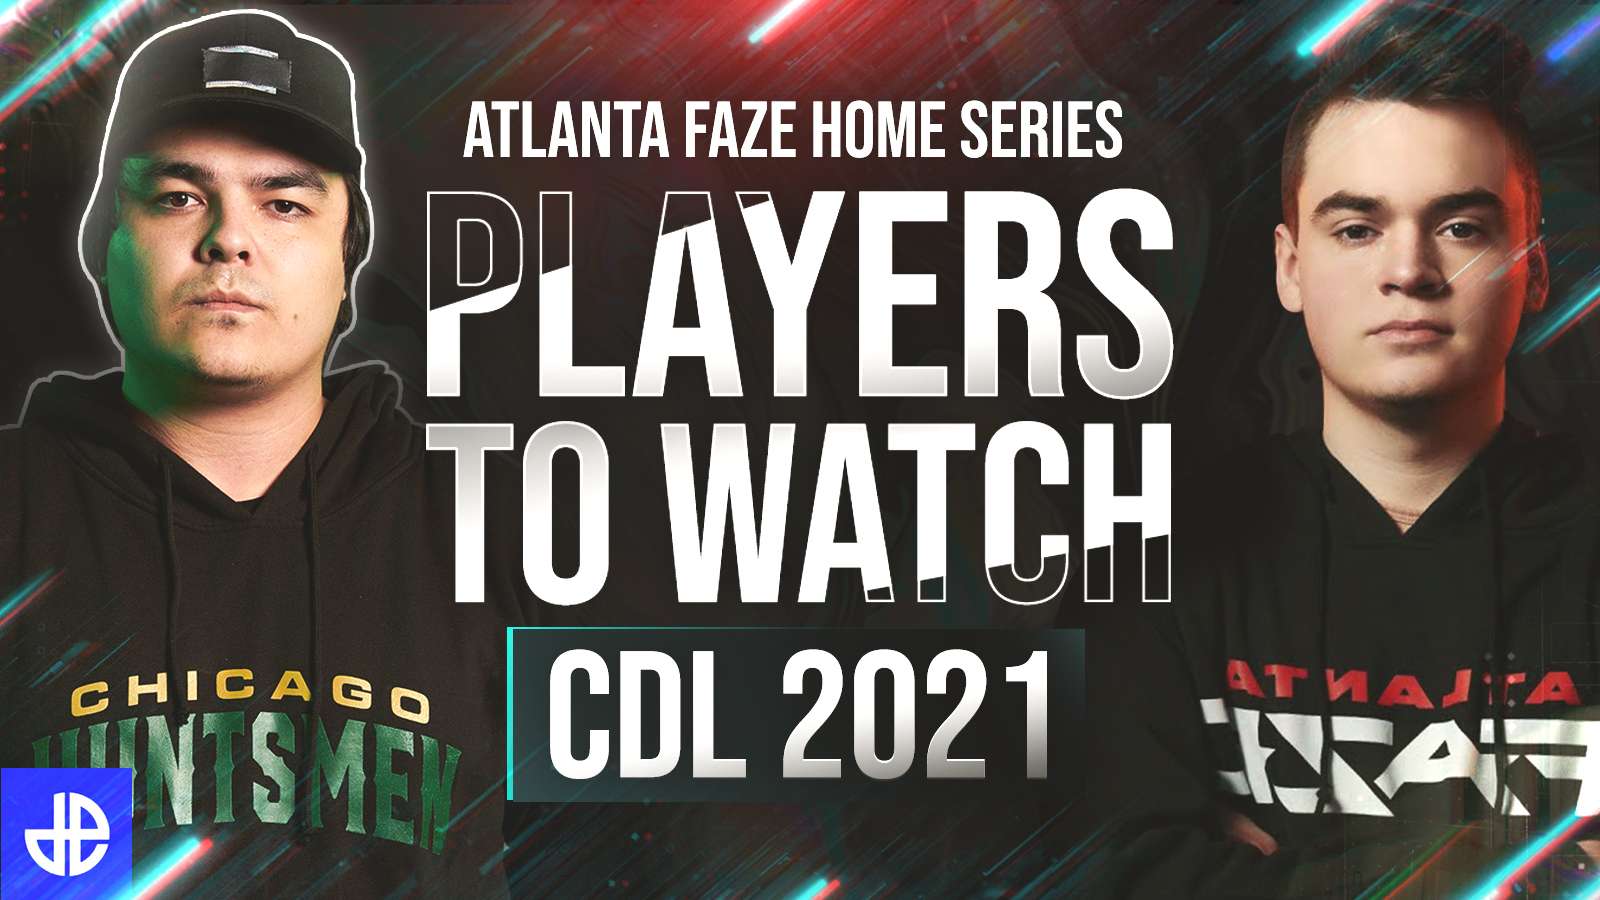 CDL 2021 FaZe opening weekend players to watch